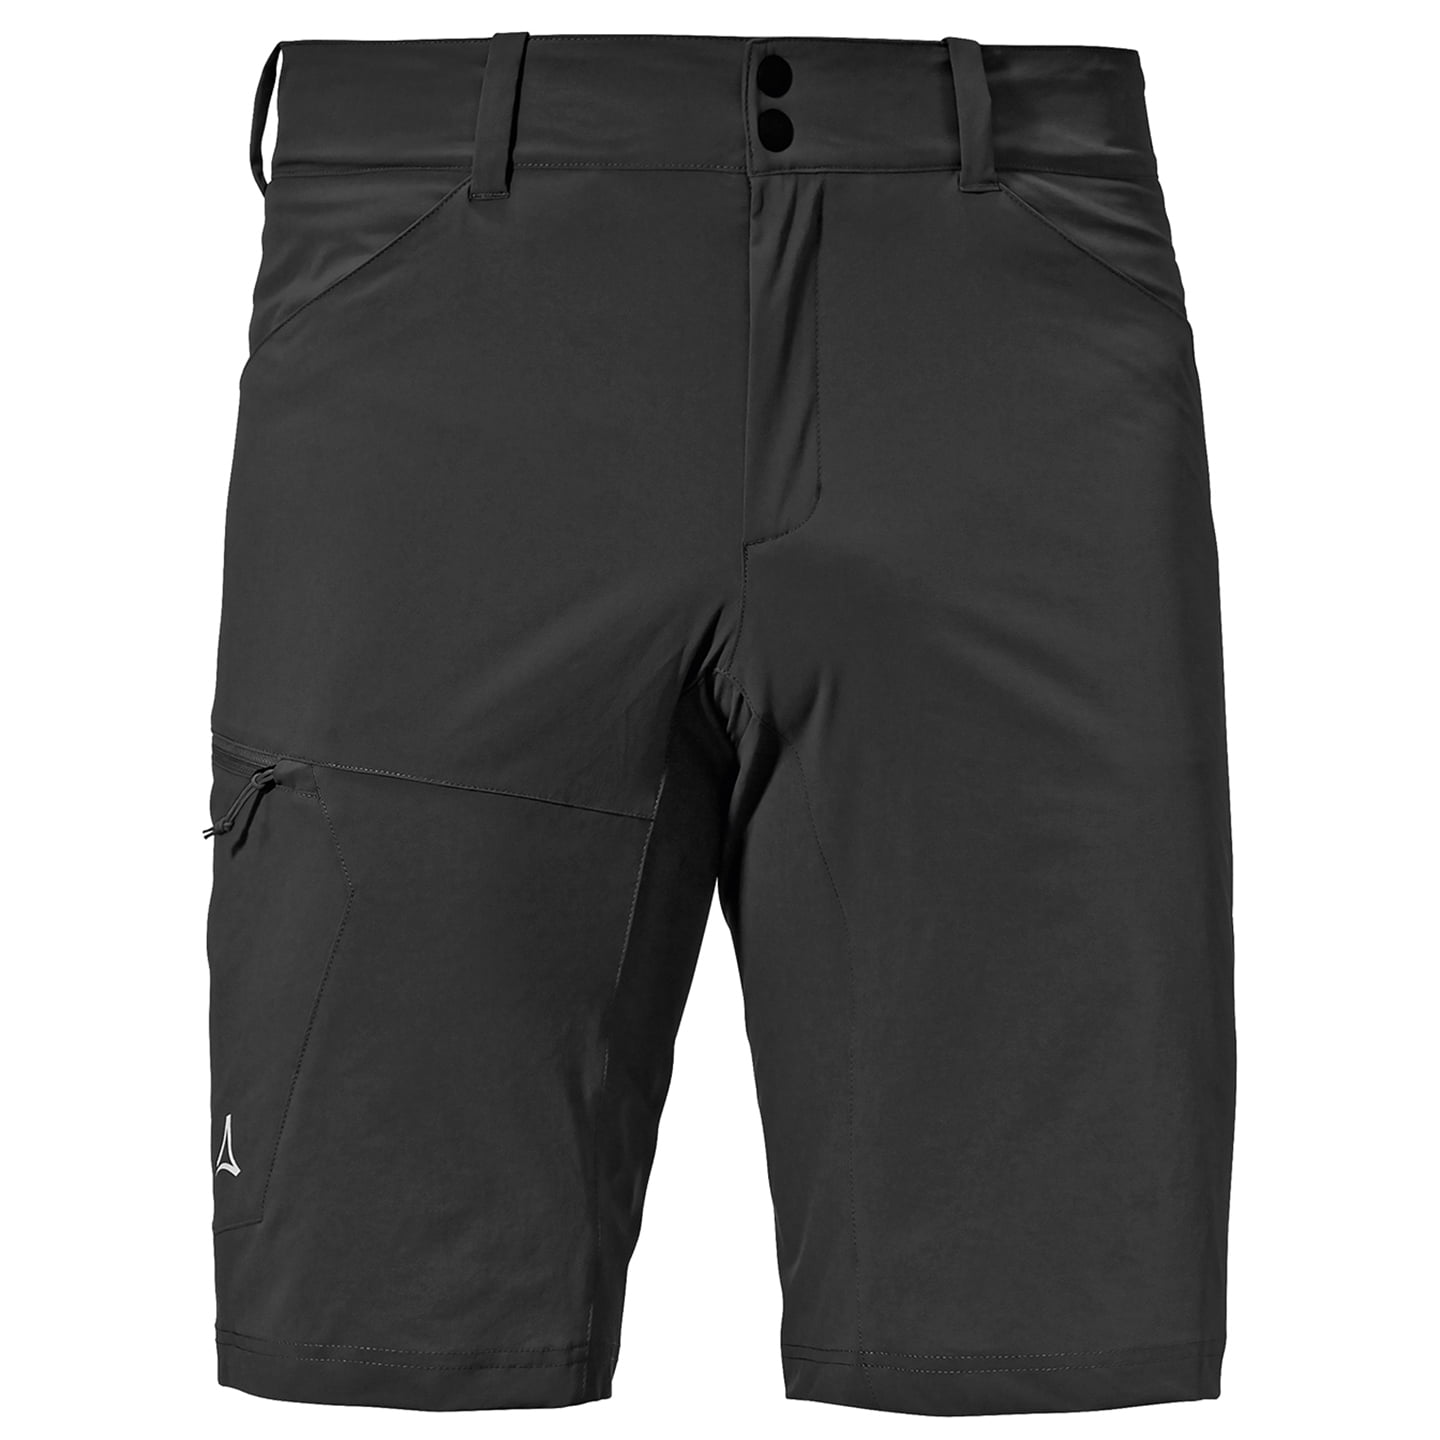 SCHOFFEL w/o Pad Danube Bike Shorts, for men, size 50